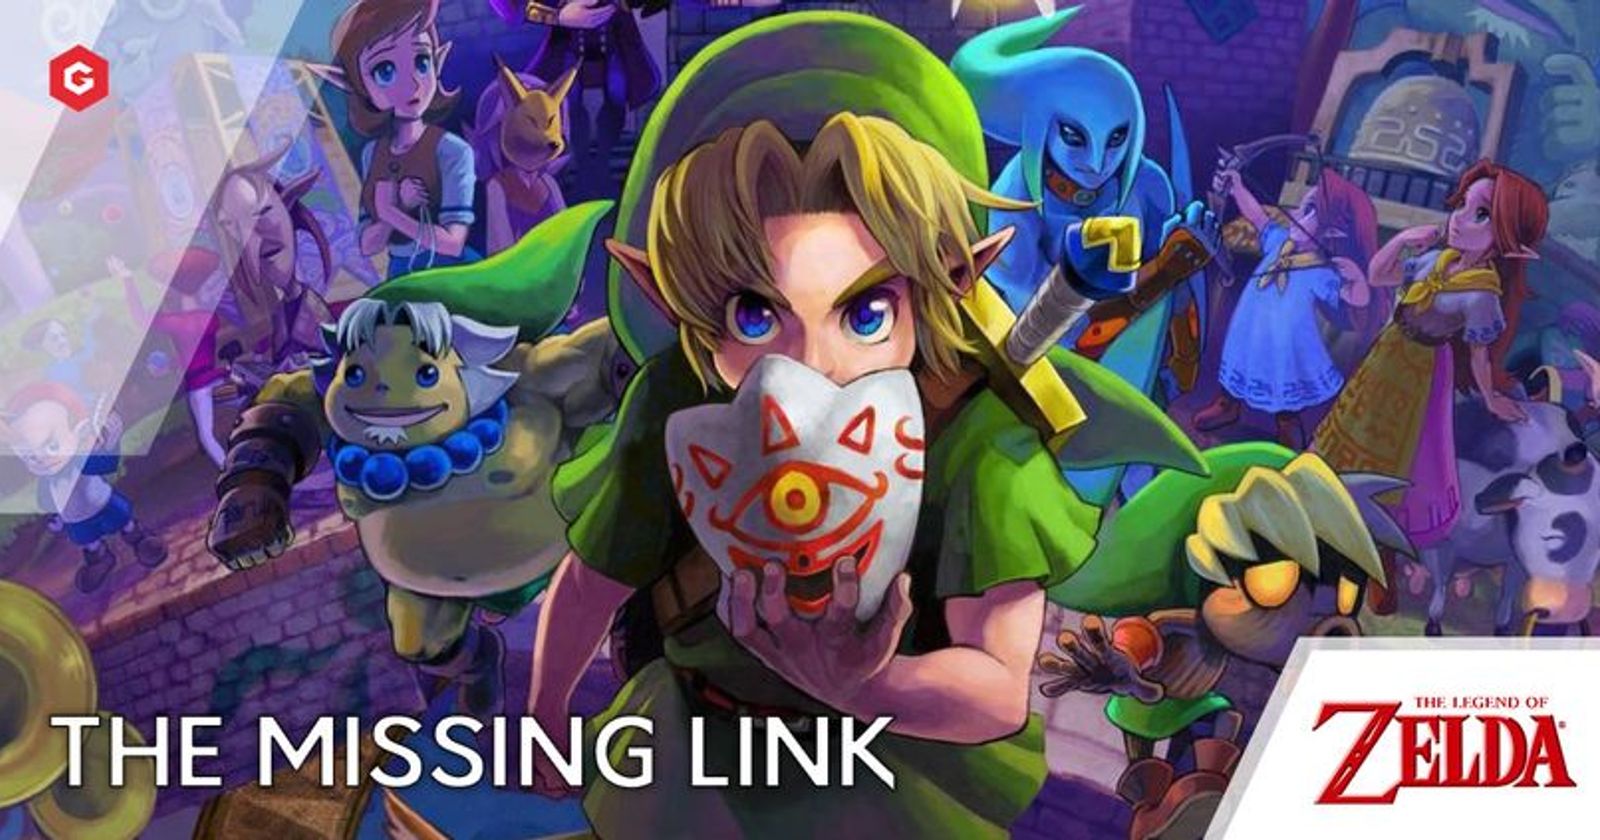 The Legend of Zelda: The Missing Link DMCA'd by Nintendo